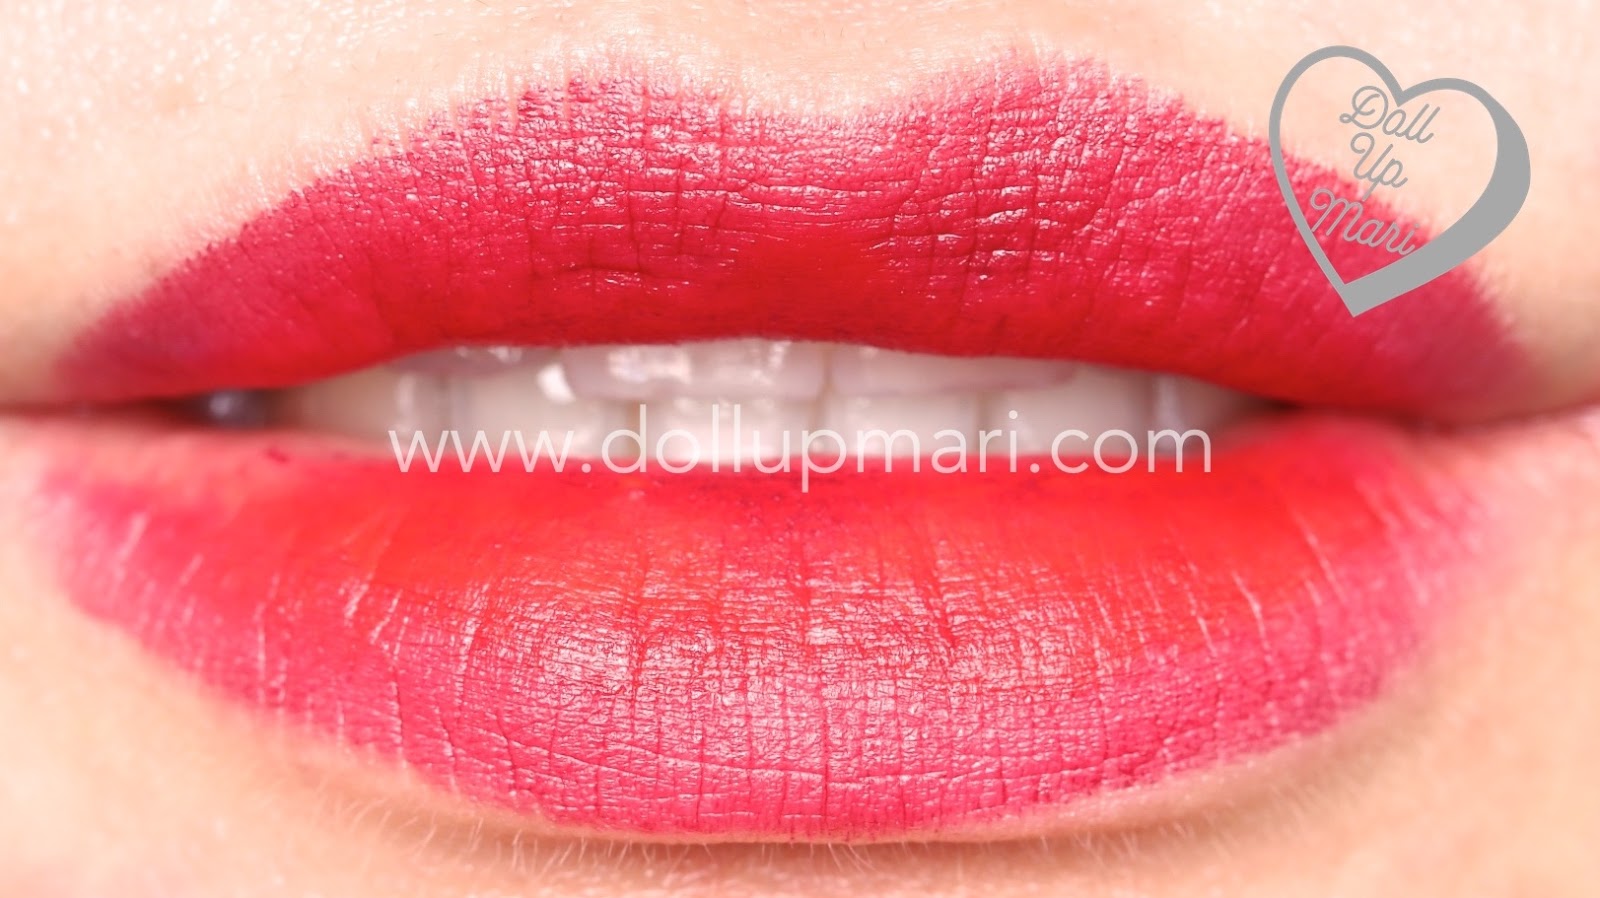 lip swatch of Wild Cherry shade of AVON Perfectly Matte Lipstick